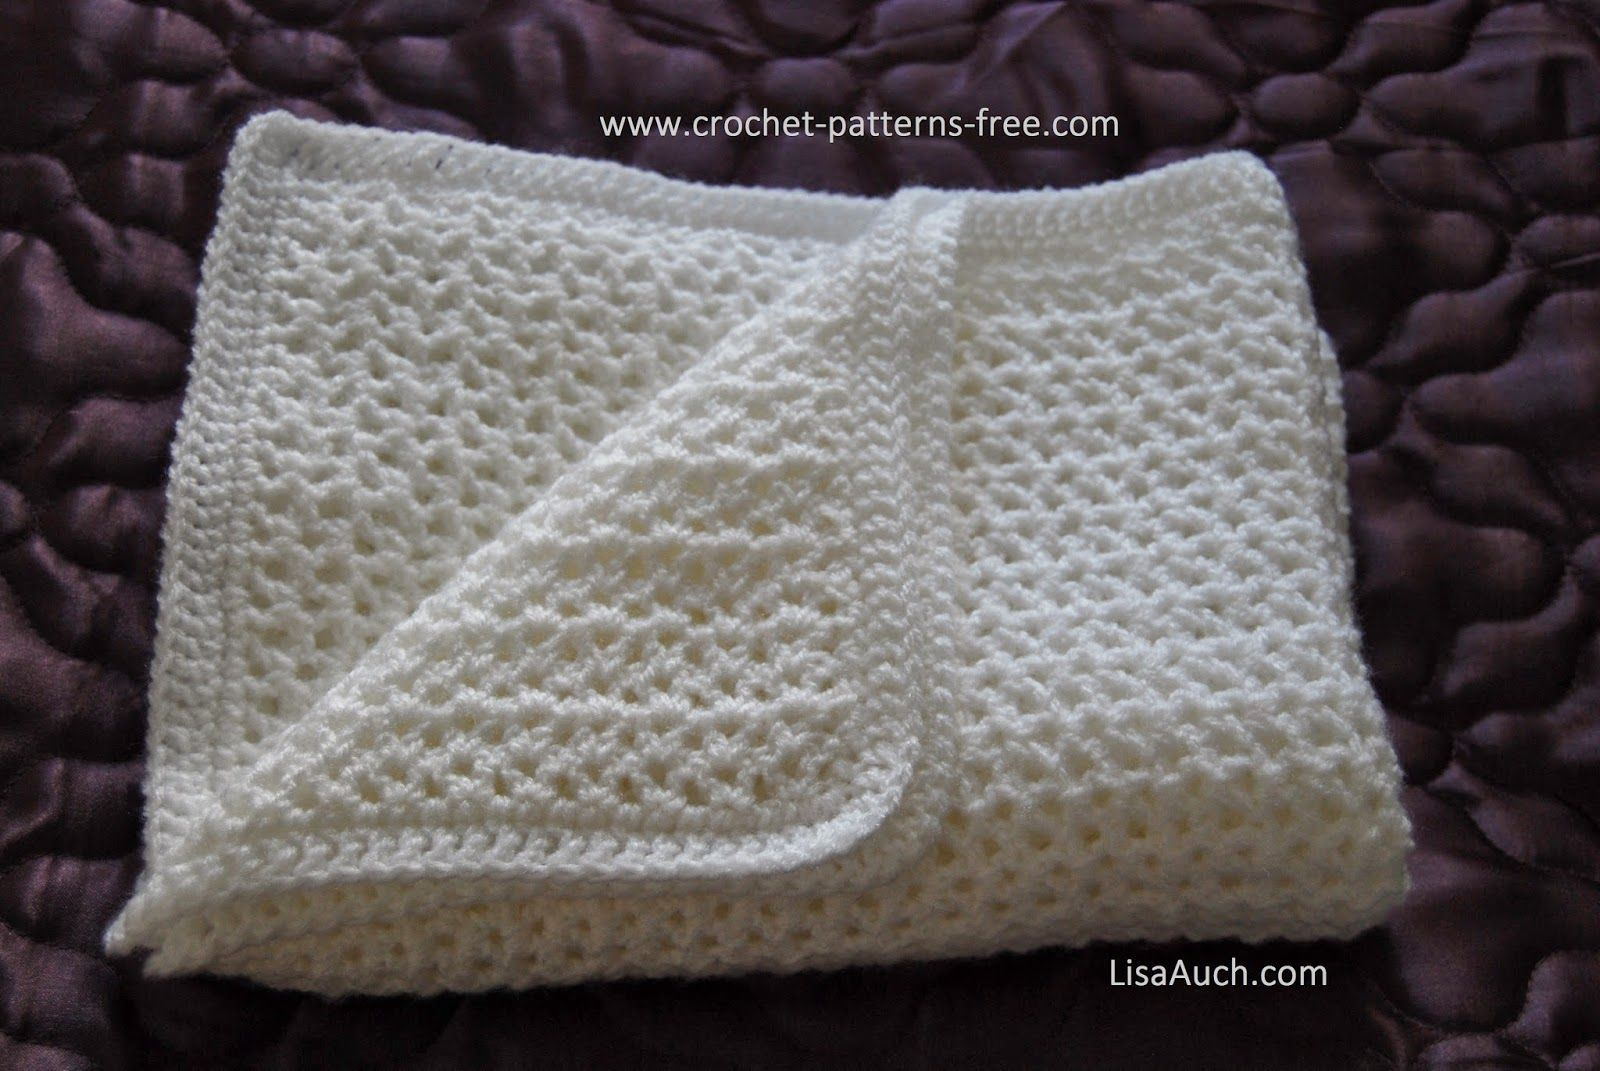 Easy Baby Crochet Blanket Pattern How To Crochet An Easy Ba Blanket Ideal For Beginners Free